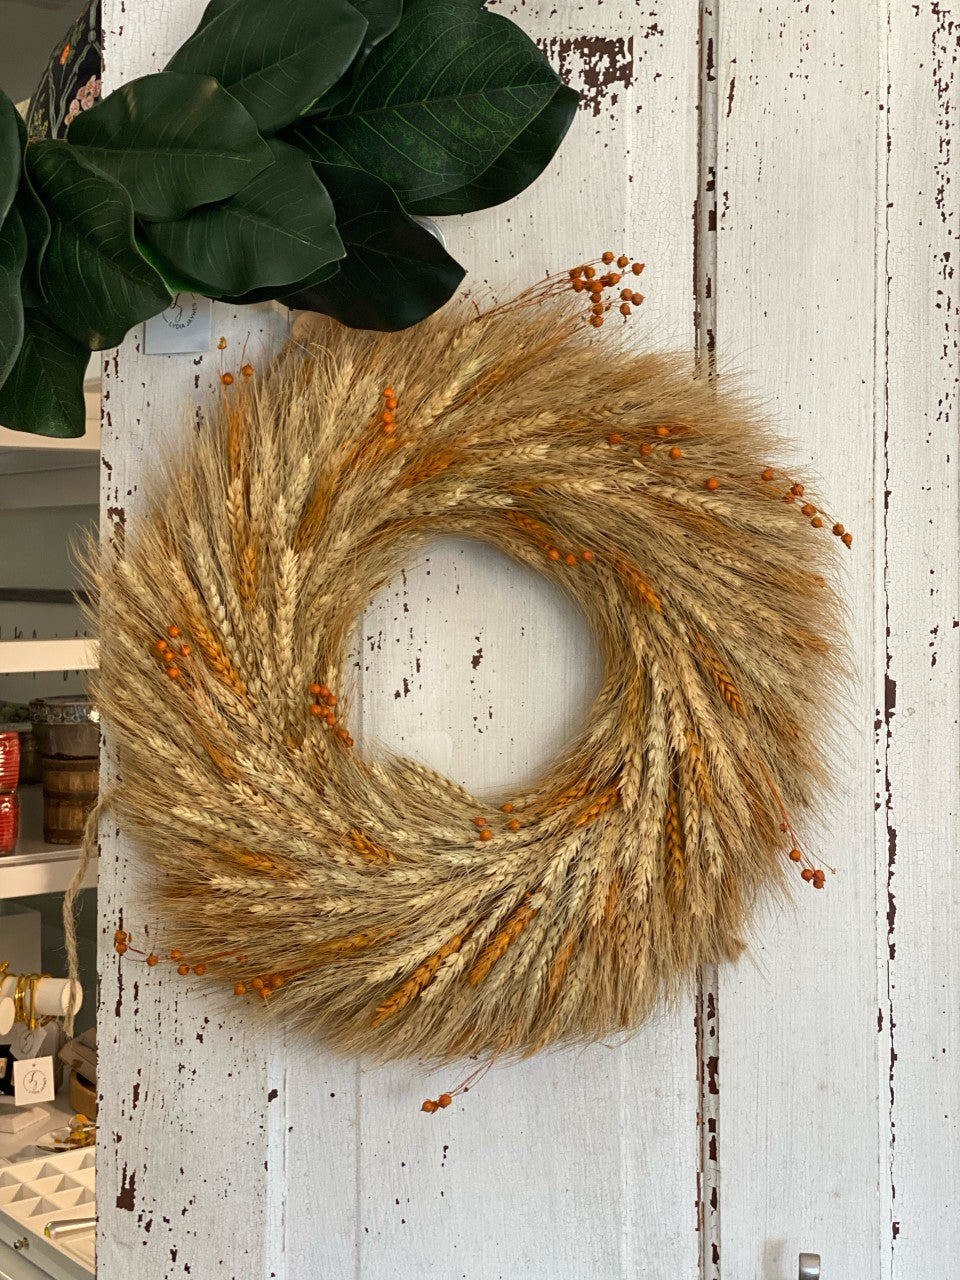 Fall Wheat Wreath